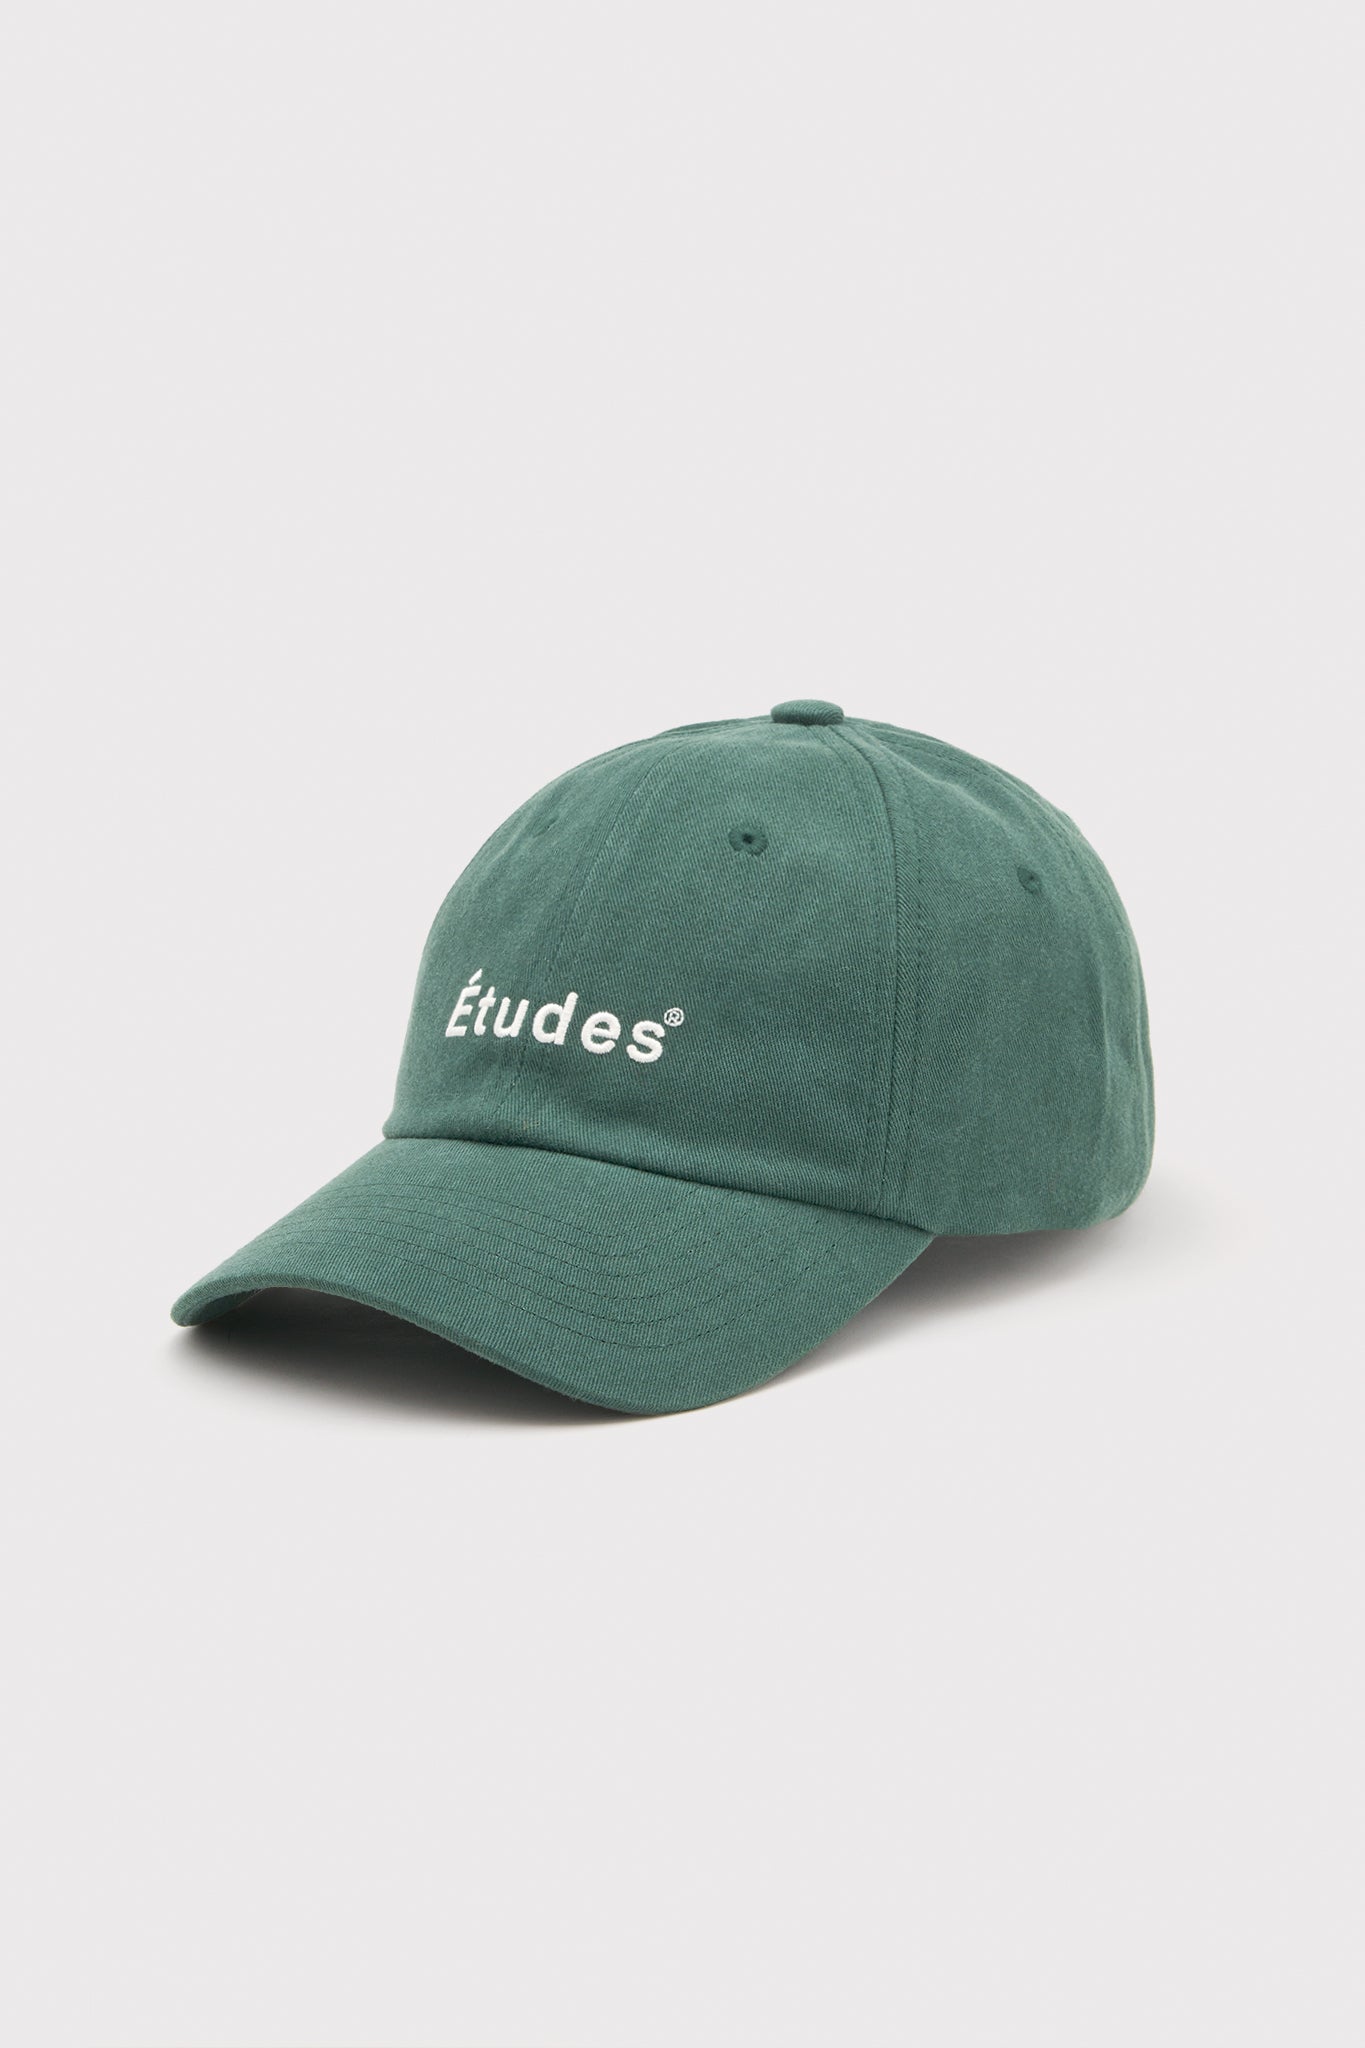 ÉTUDES BOOSTER ETUDES DK GREEN HATS 1